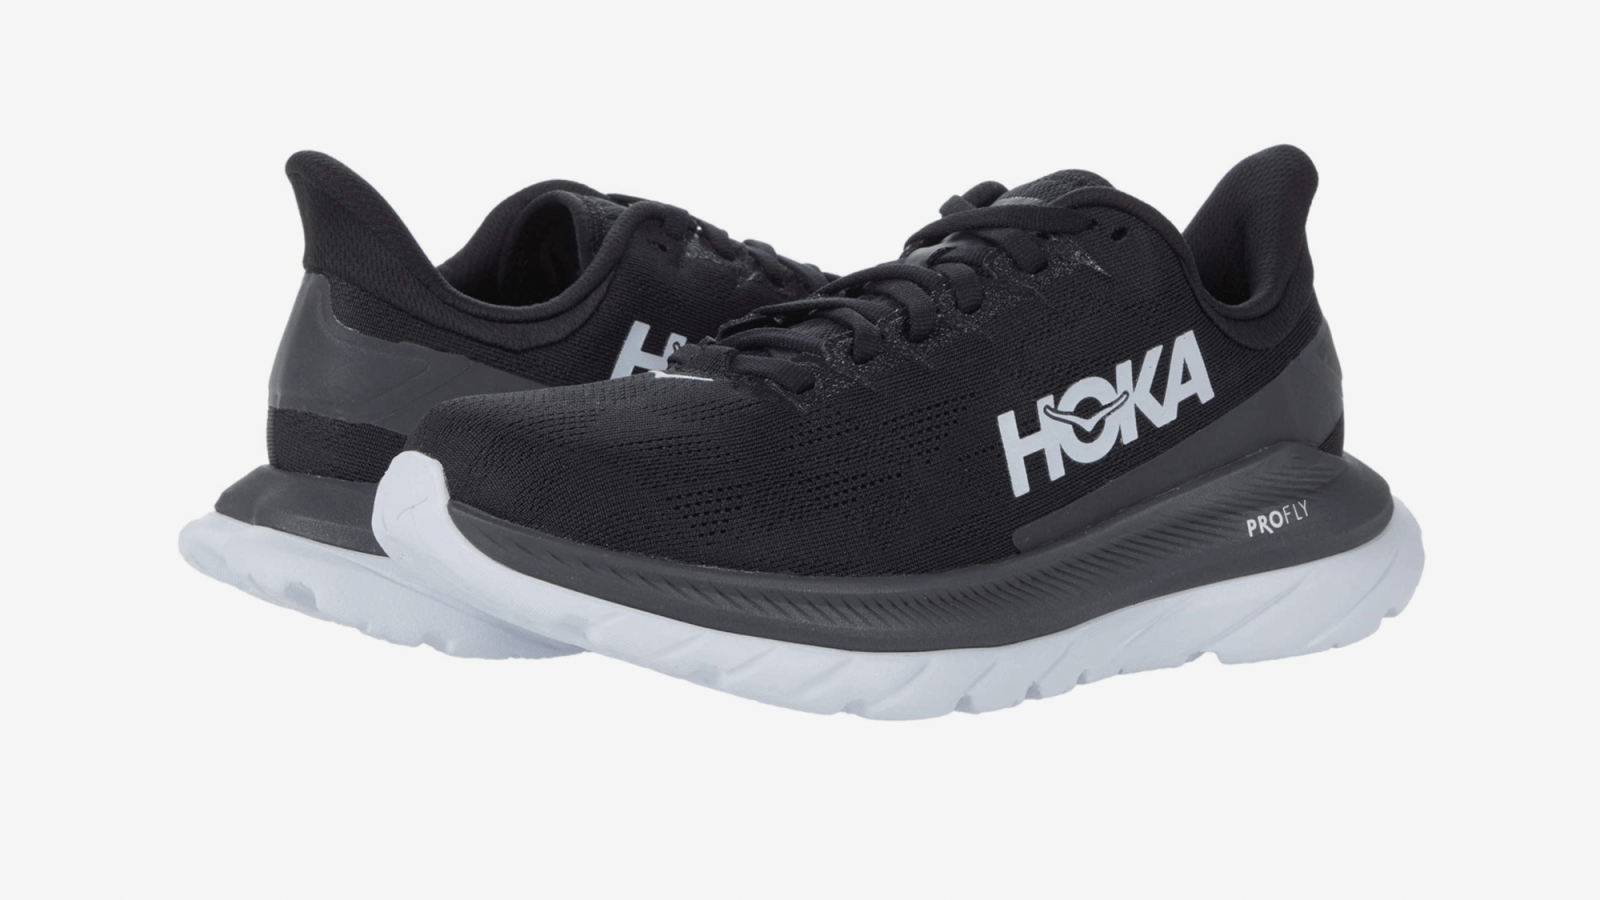 Hoka running shoes